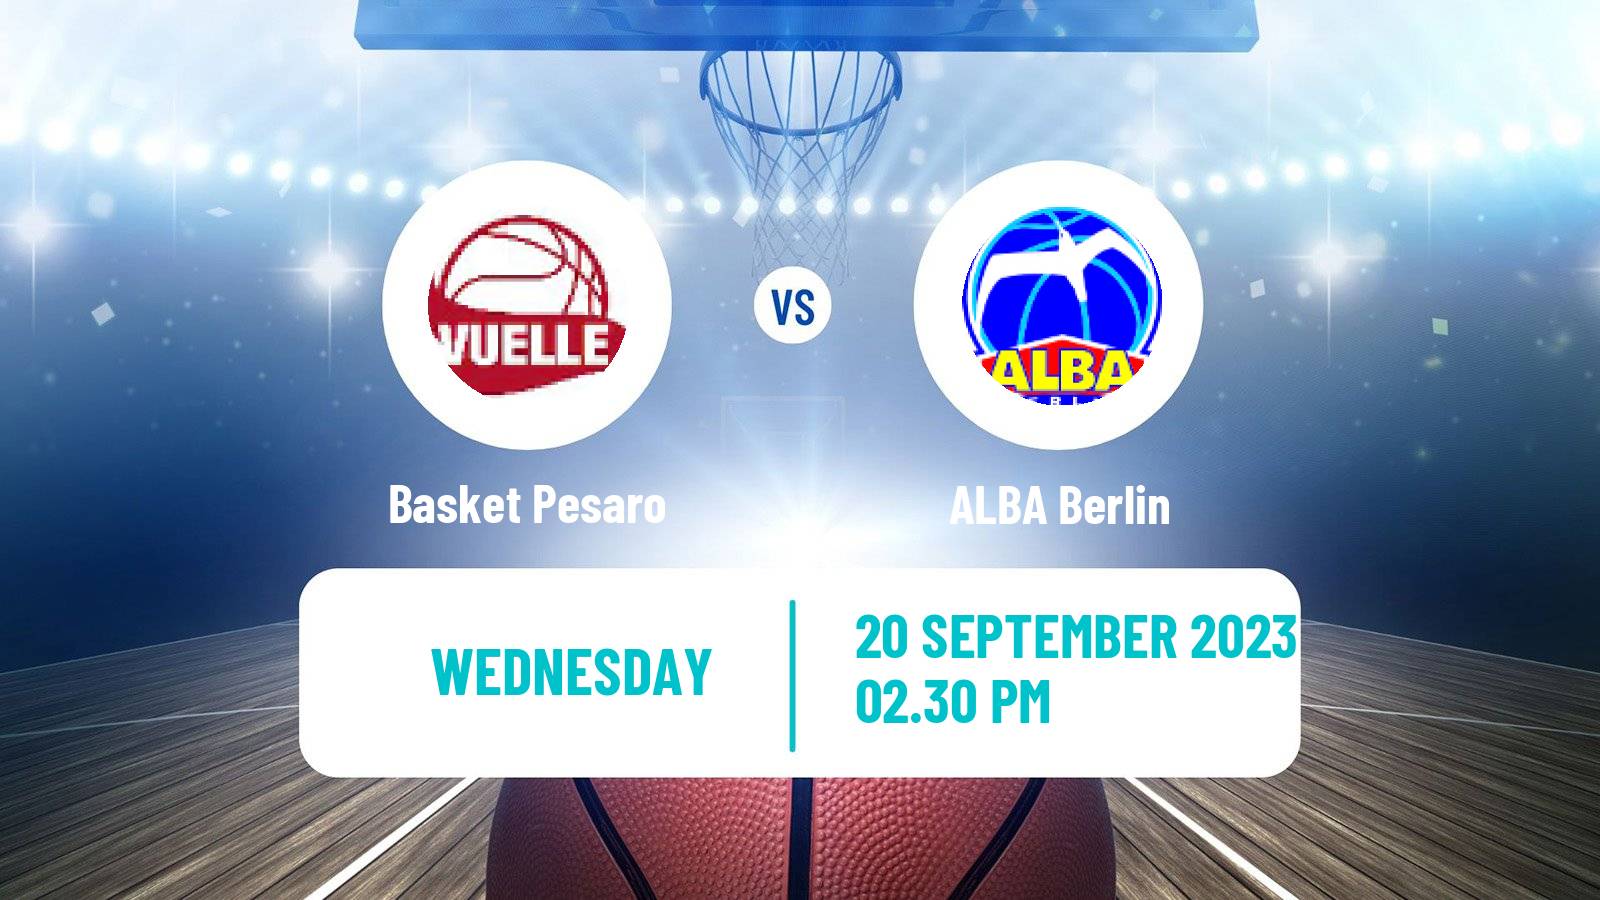 Basketball Club Friendly Basketball Basket Pesaro - ALBA Berlin